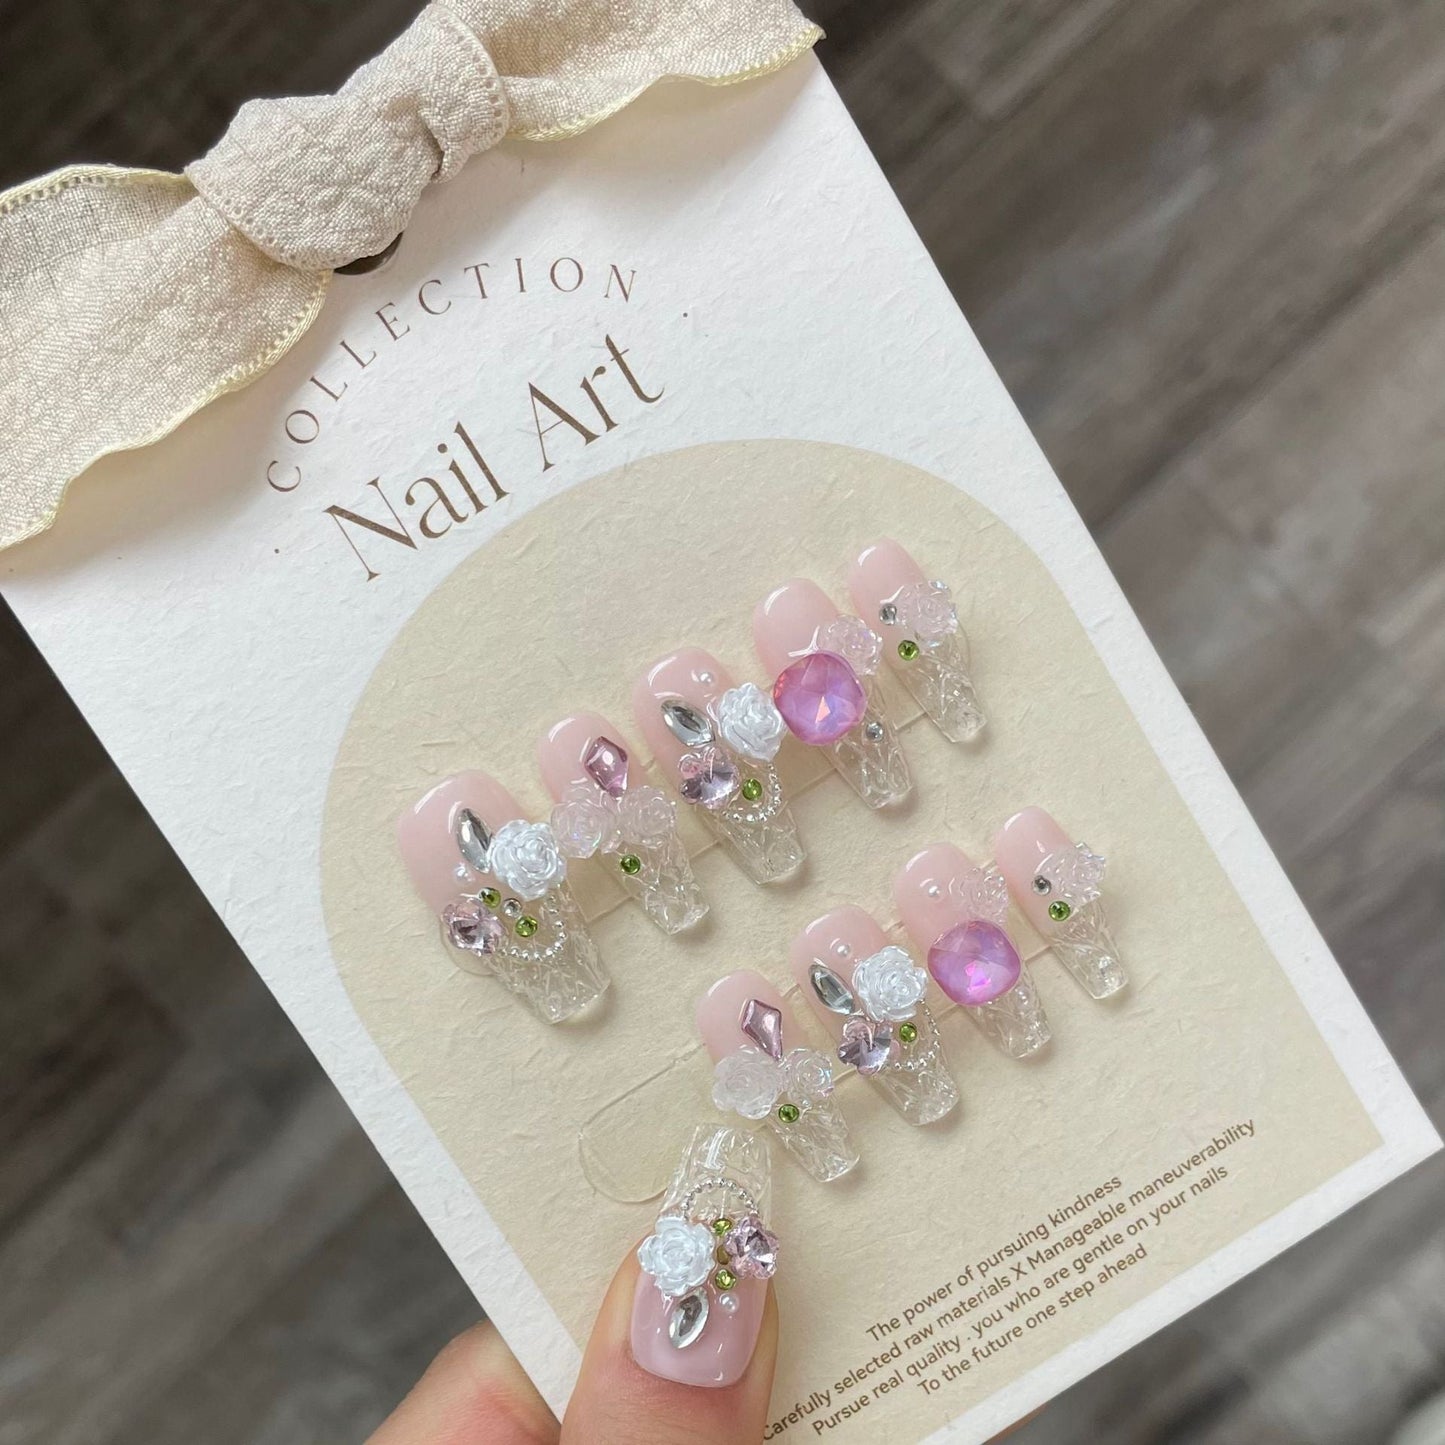 838/845 camellia flower style press on nails 100% handmade false nails nude color